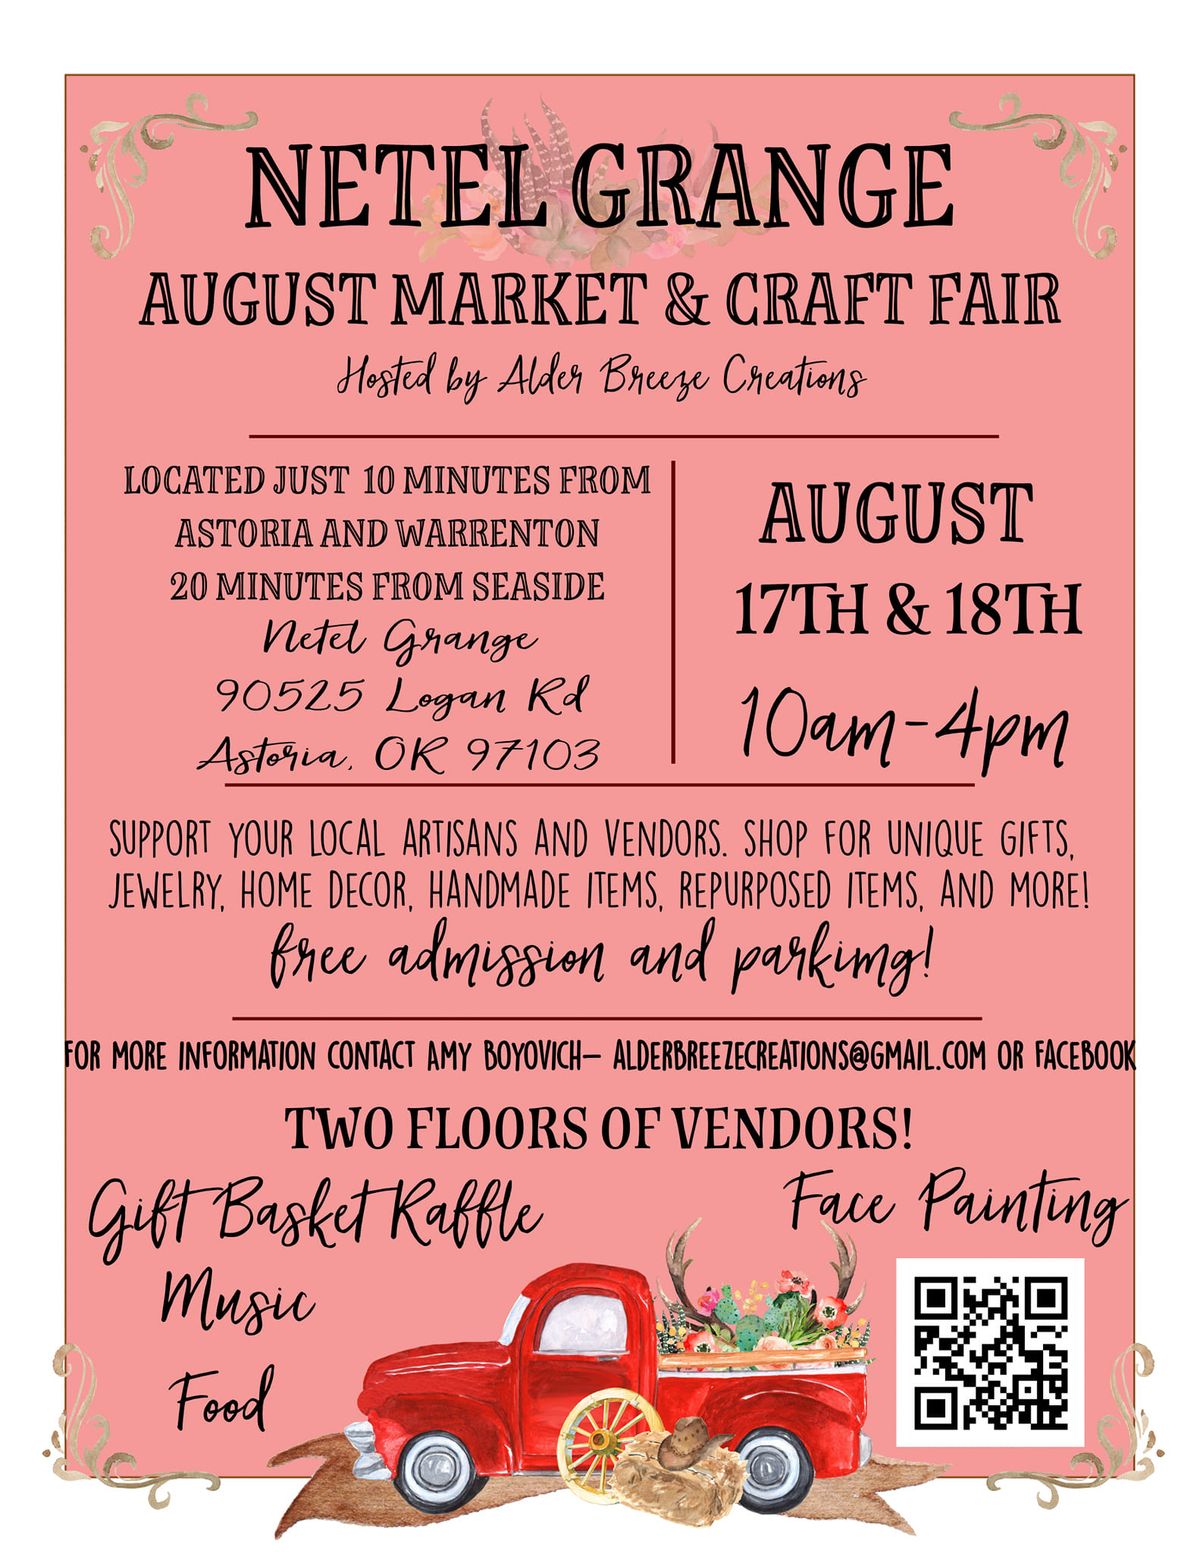 Netel Grange August Market and Craft Fair 